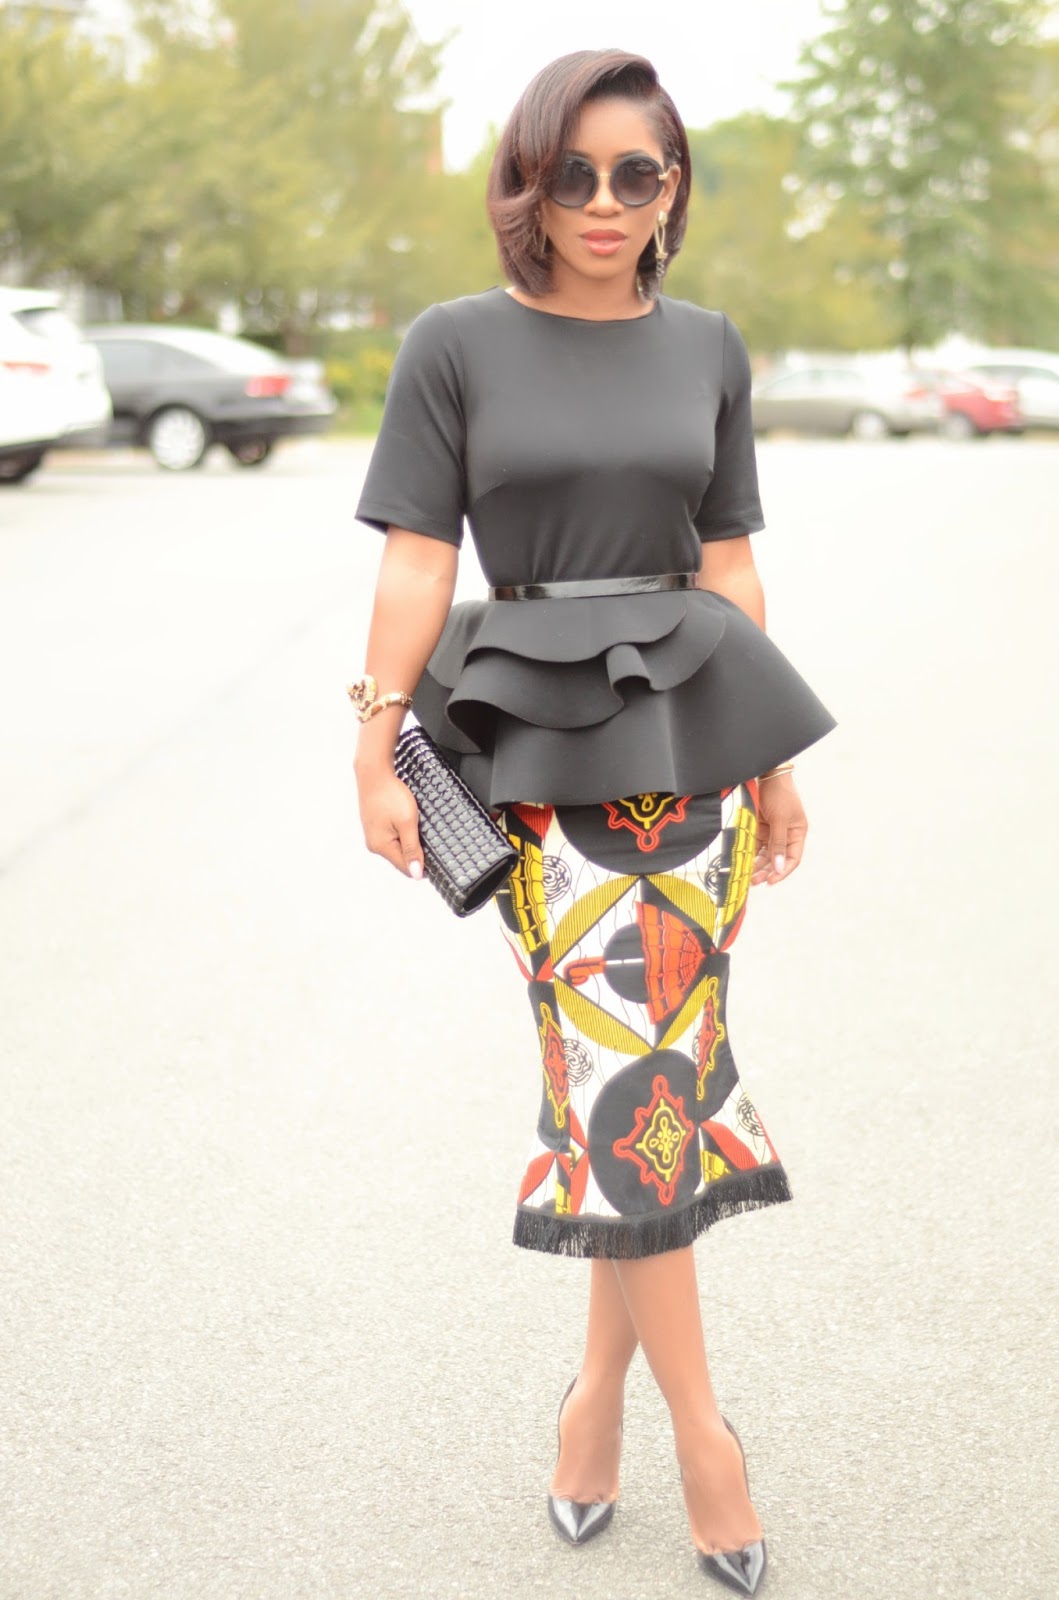 Living My Bliss InStyle: Peplum Top & Ankara Skirt